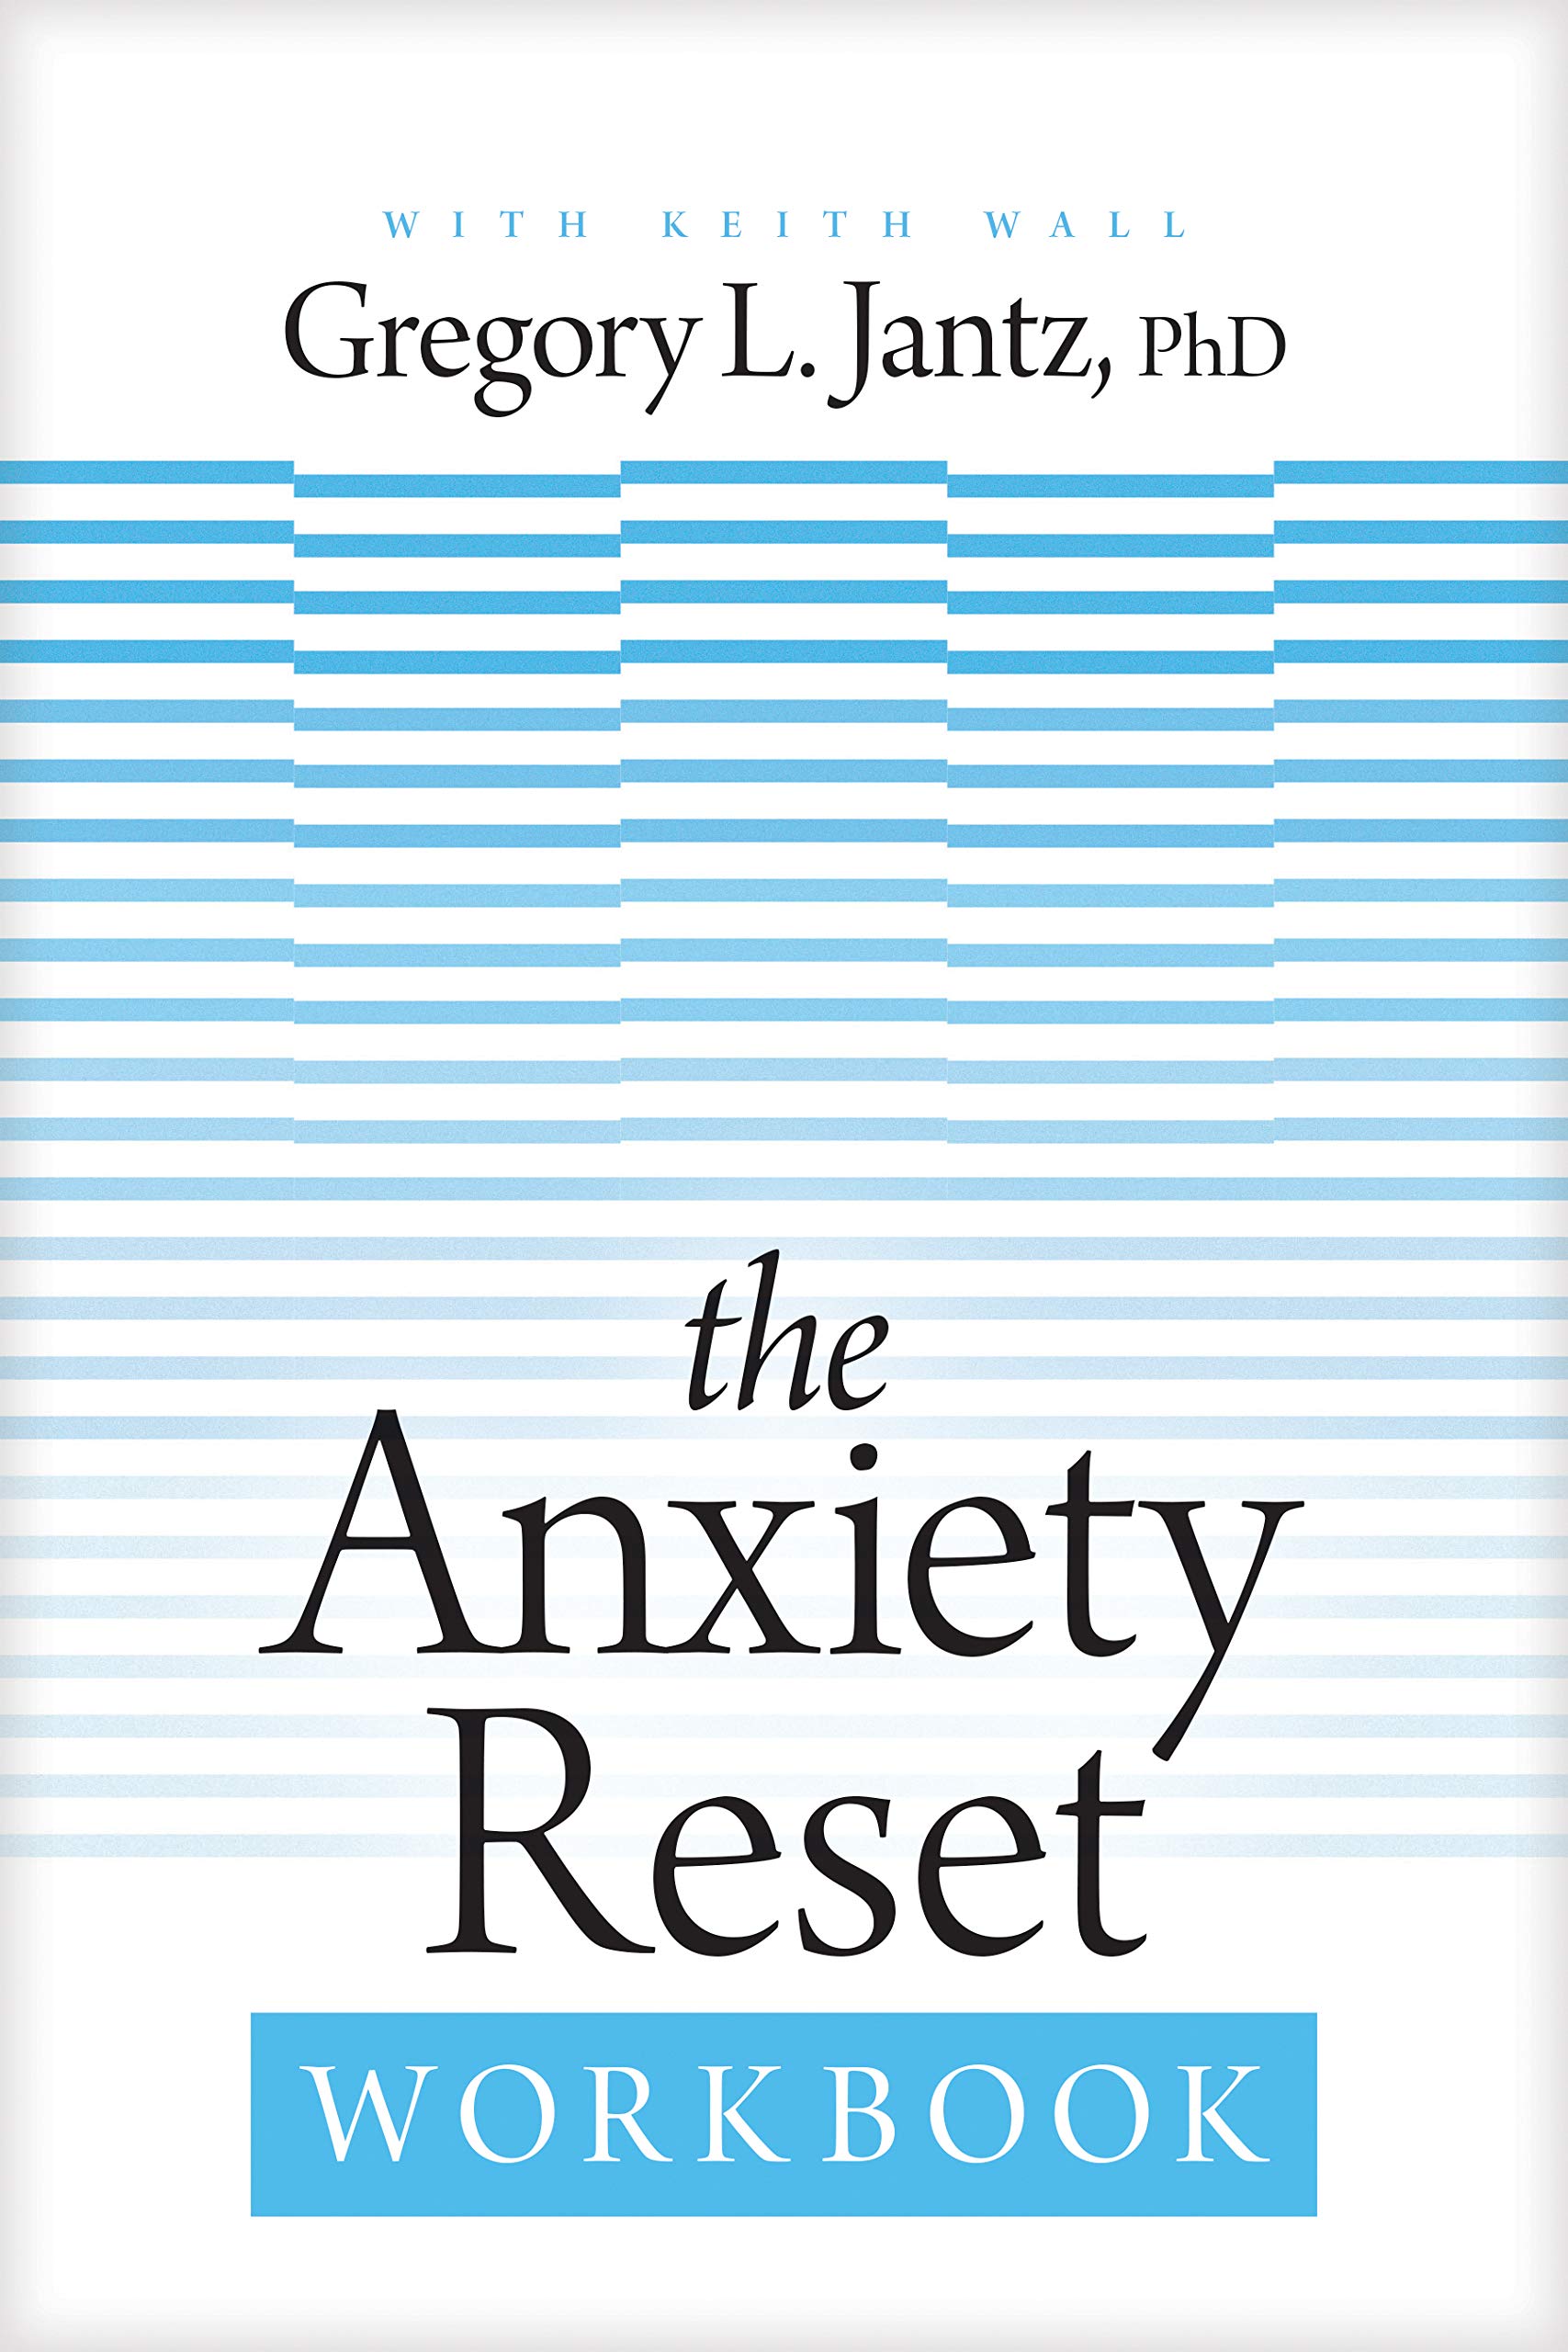 Anxiety Reset workbook